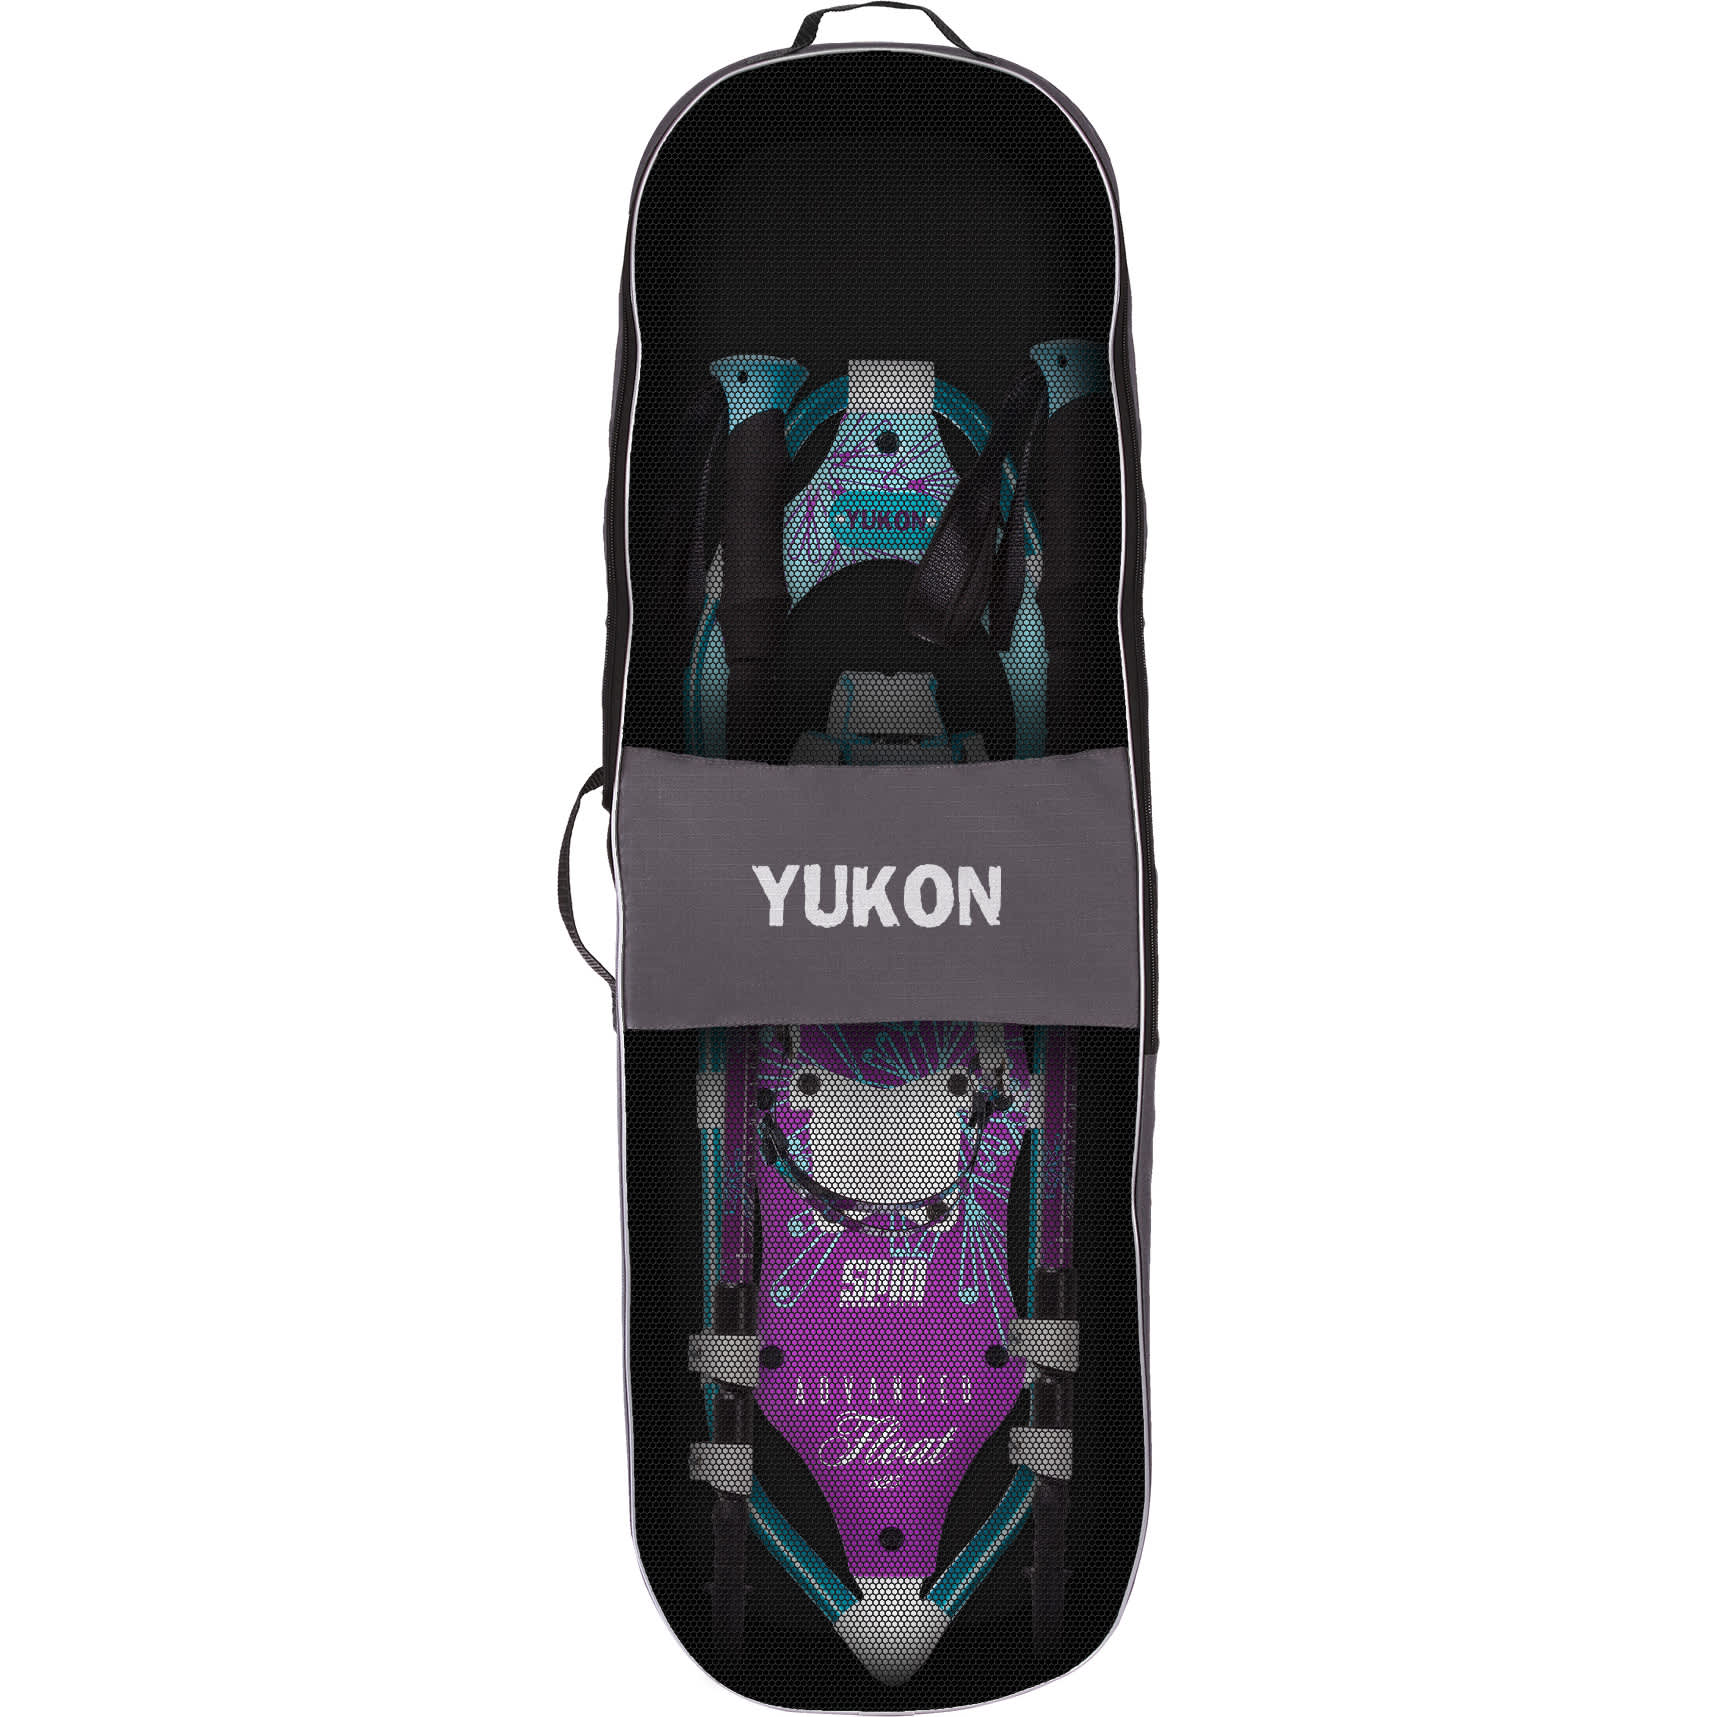 Yukon Charlie’s Advanced Spin Float Kit